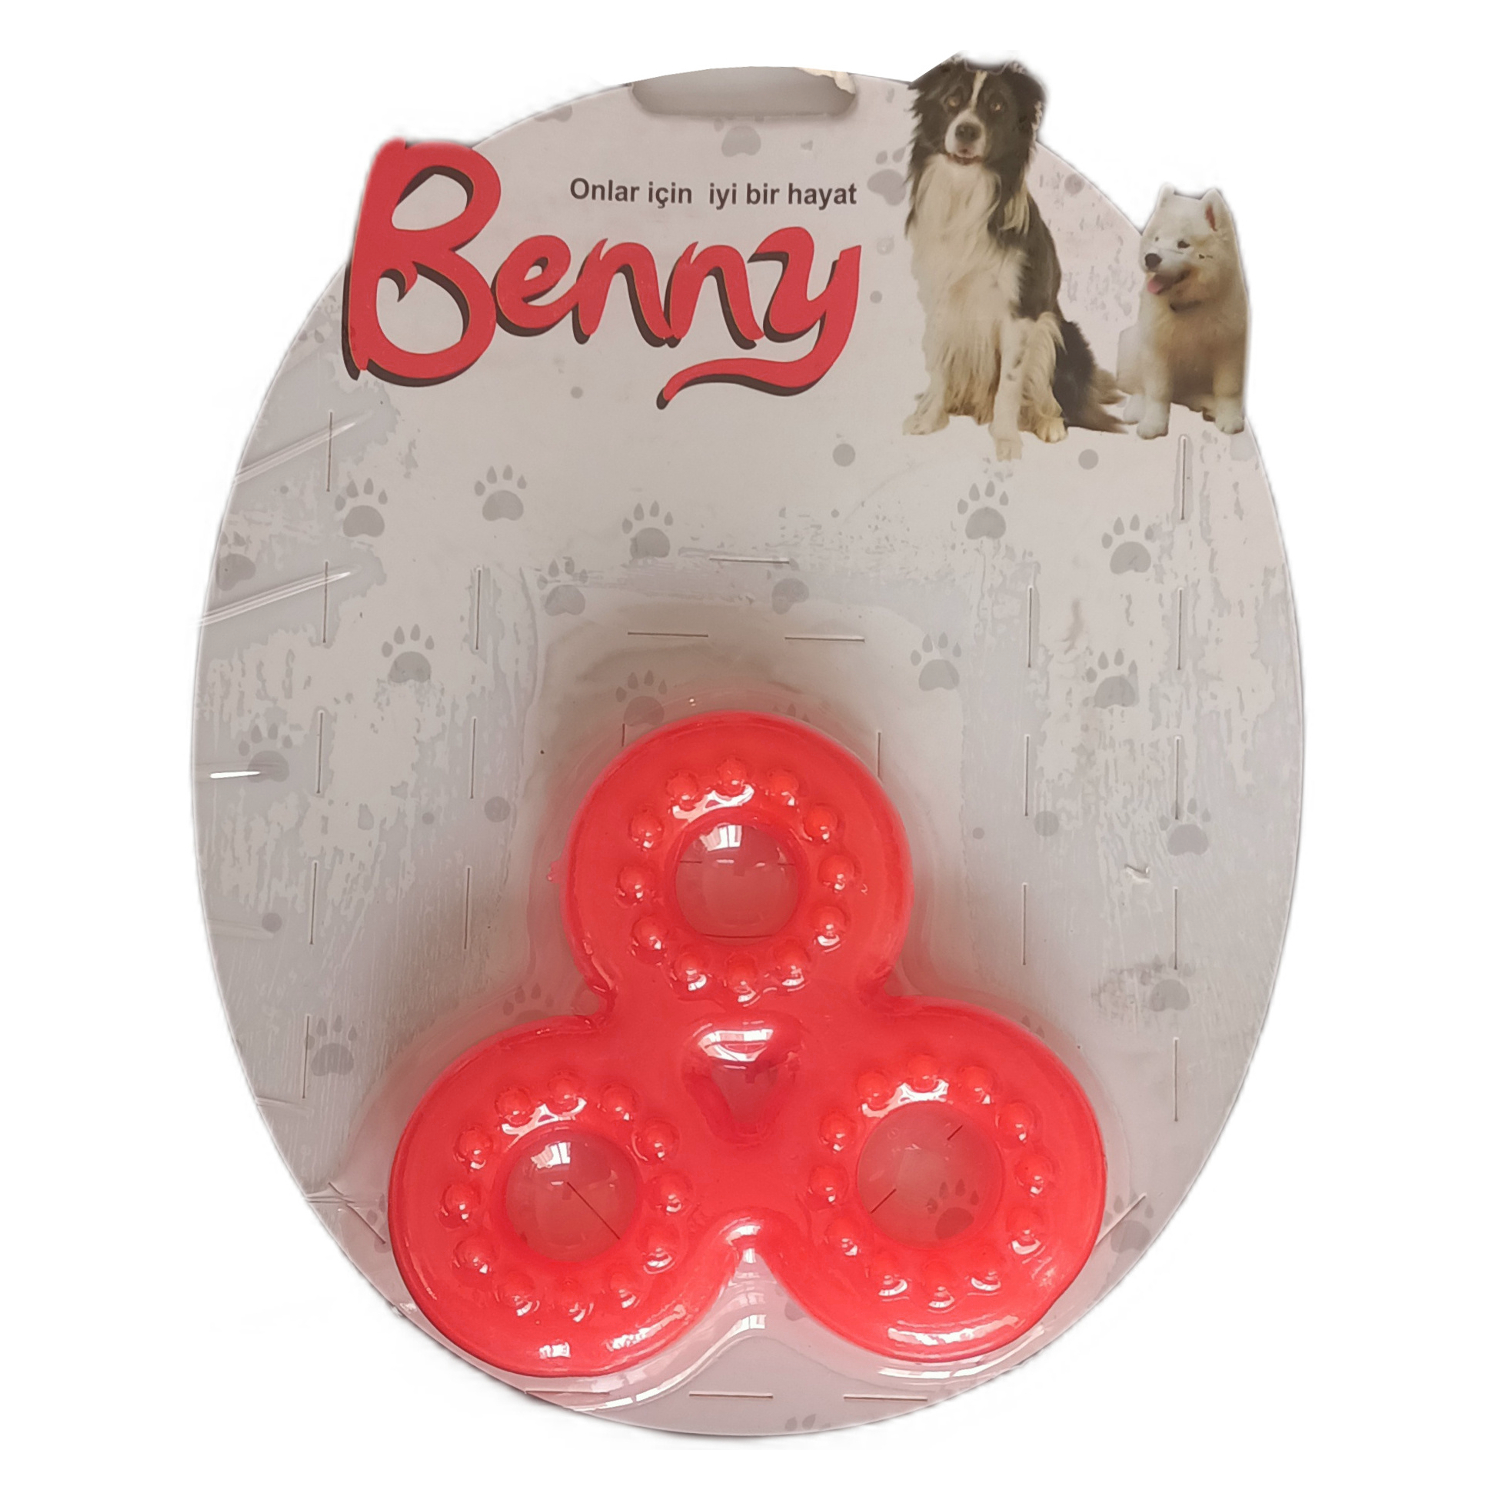 CLZ205 Benny Köpek Oyuncağı Üçlü Halka 9 x 9 cm Kırmızı